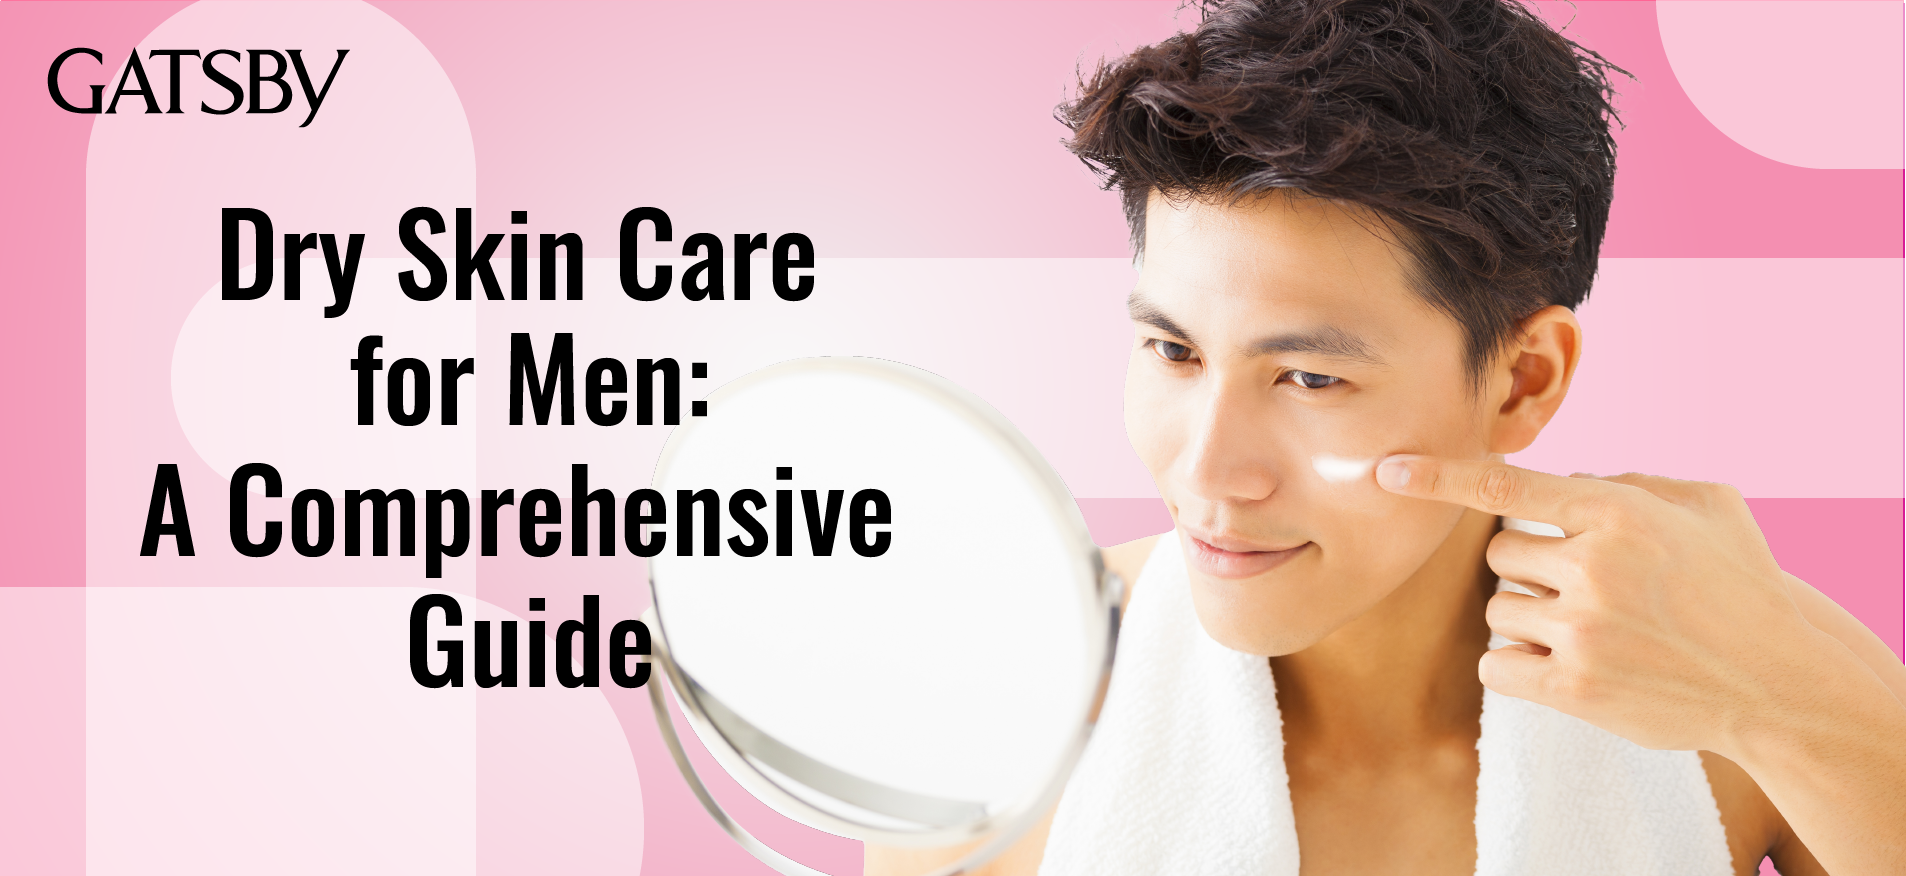 oily_skin_care_for_men_a_comprehensive_guide